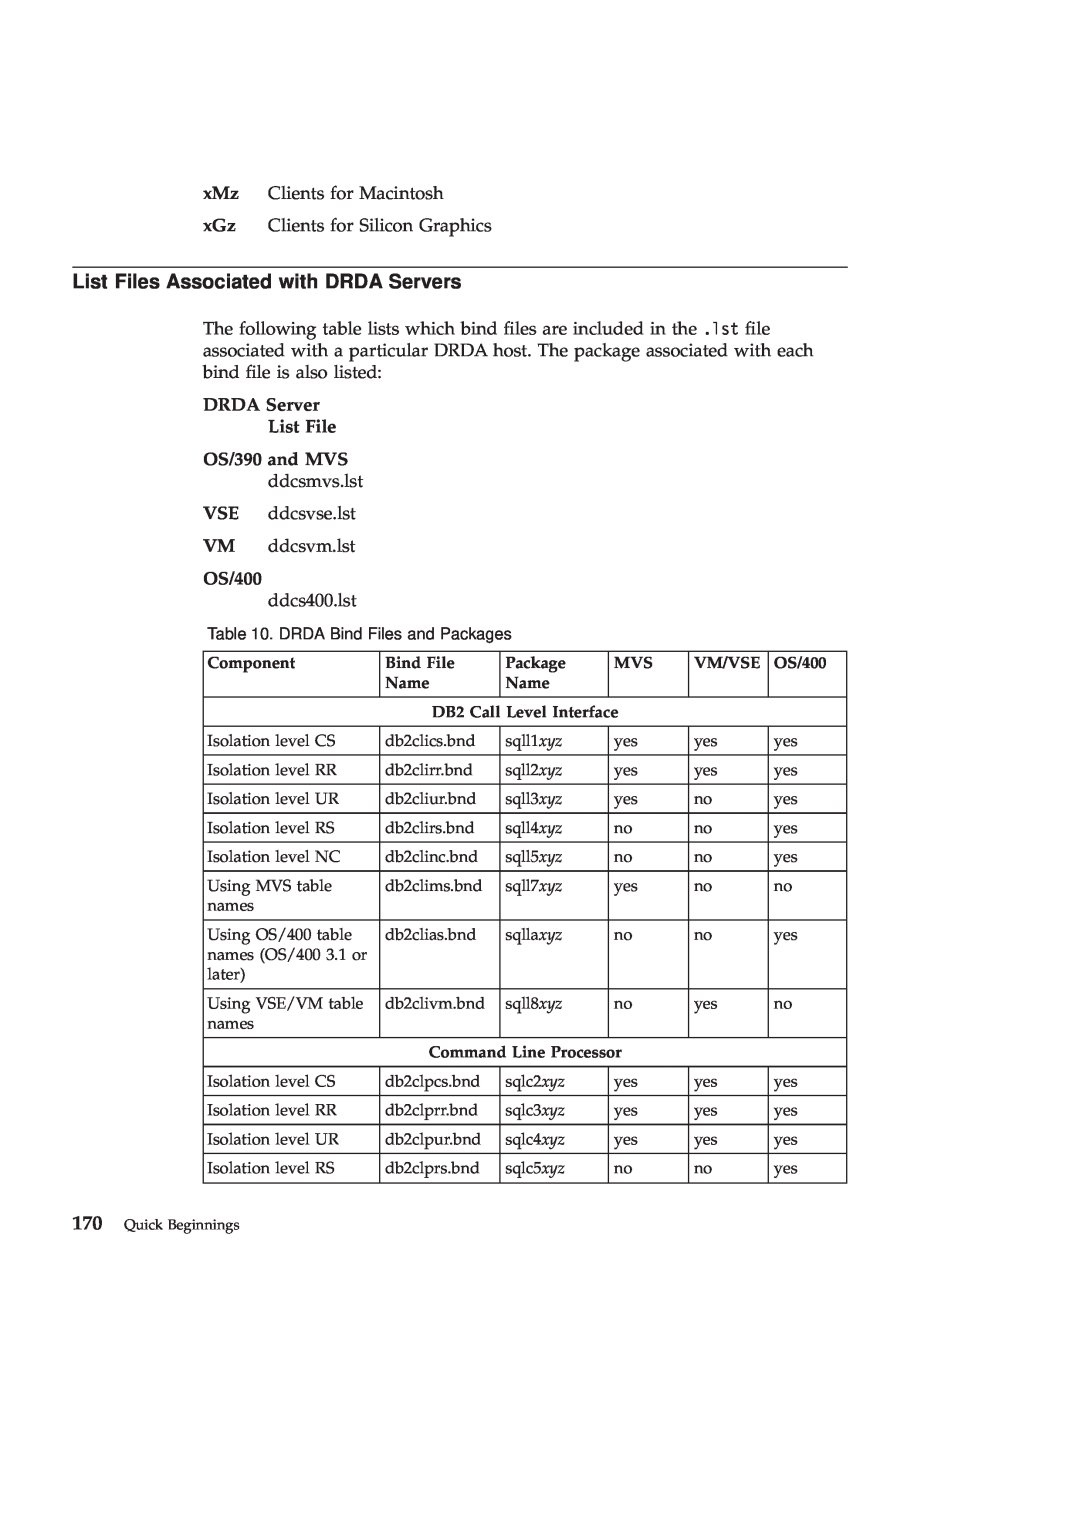 IBM GC09-2830-00 manual List Files Associated with DRDA Servers, DRDA Server List File OS/390 and MVS, OS/400 